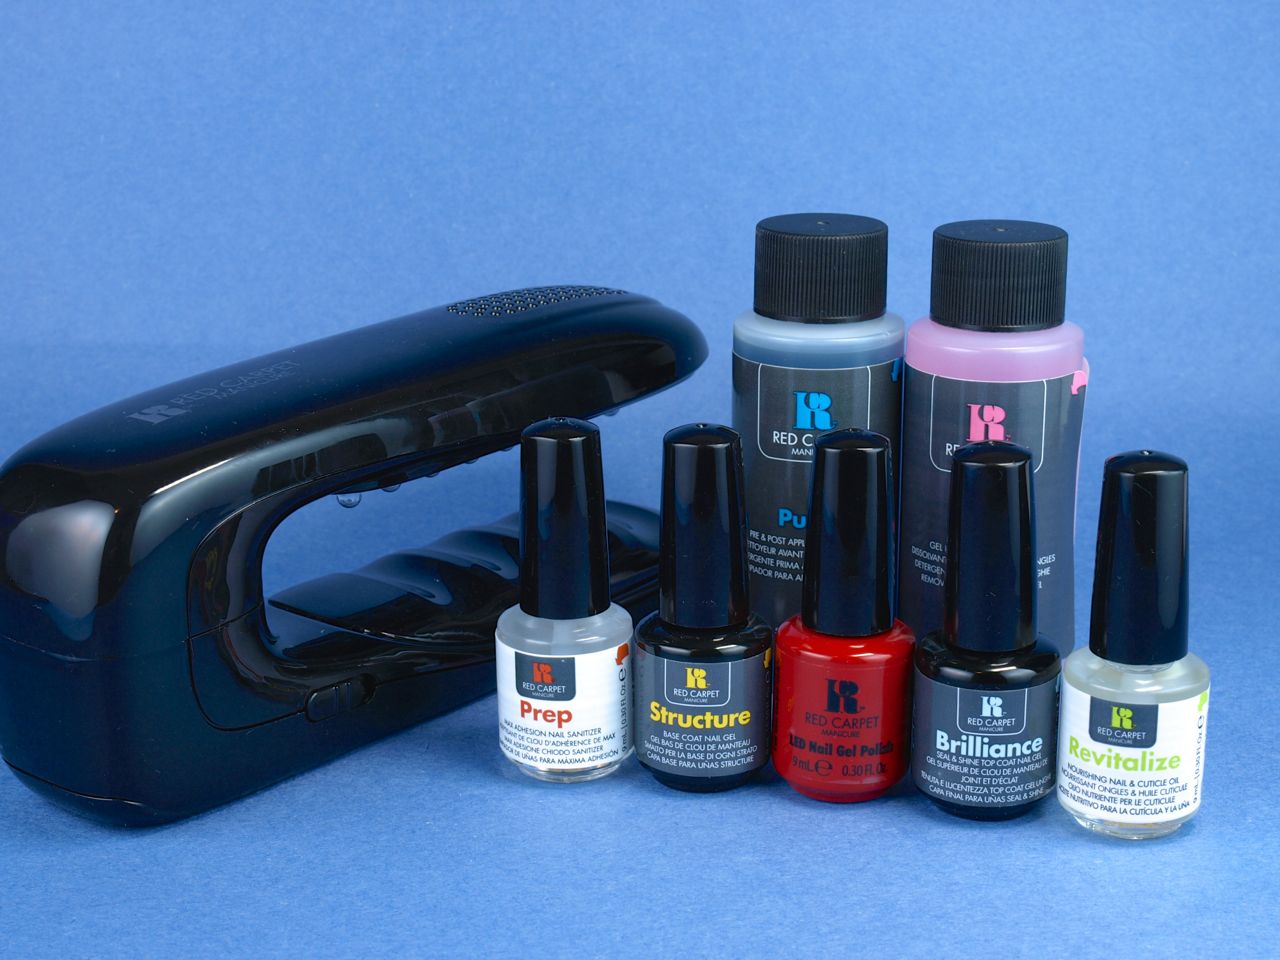 Gellen 10 Colors Gel Nail Polish Starter Kit With UV/LED Light Kit, 24W Nail  Dryer, Gel Base Top Coat Nail Art Tools, Gift For Her, DIY Home/Salon Manicure  Set, Fresh Neon Rainbow